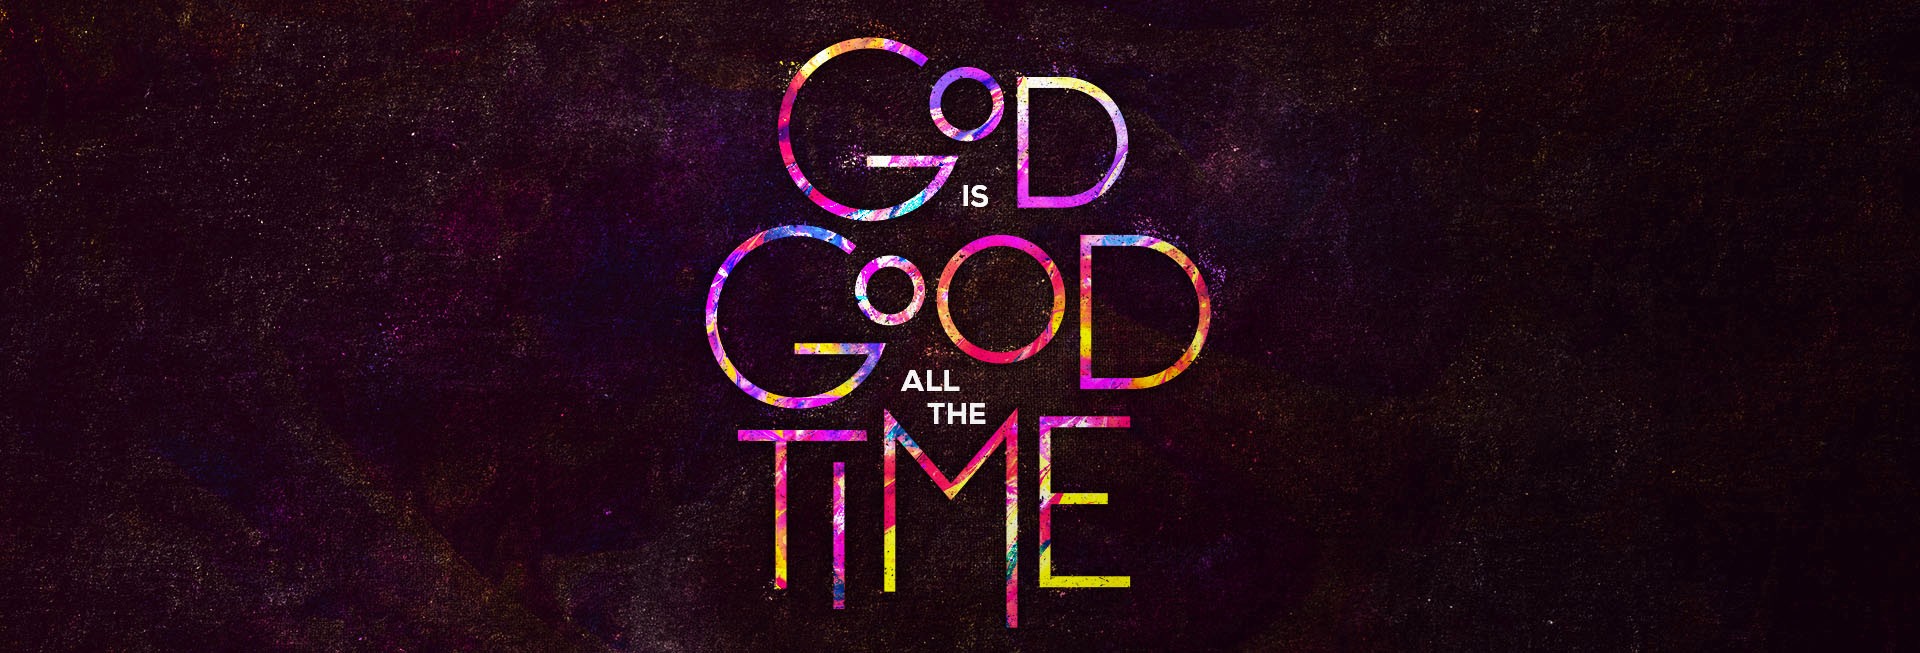 God is Good Church Website Banner